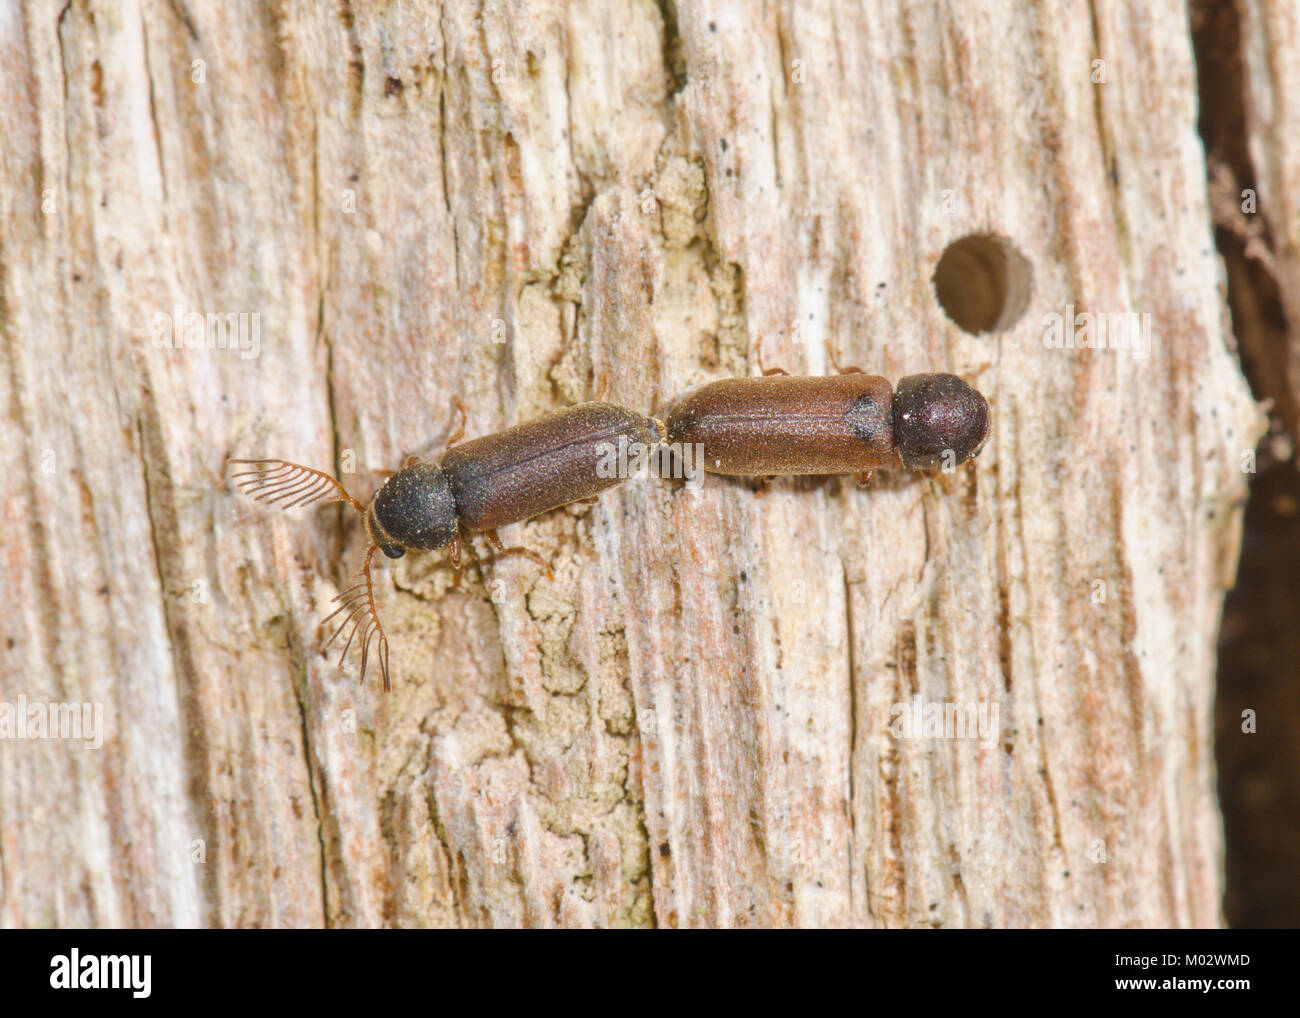 Paired Fan bearing Wood borer Beetles (Ptilinus pectinicornis). Sussex, UK Stock Photo